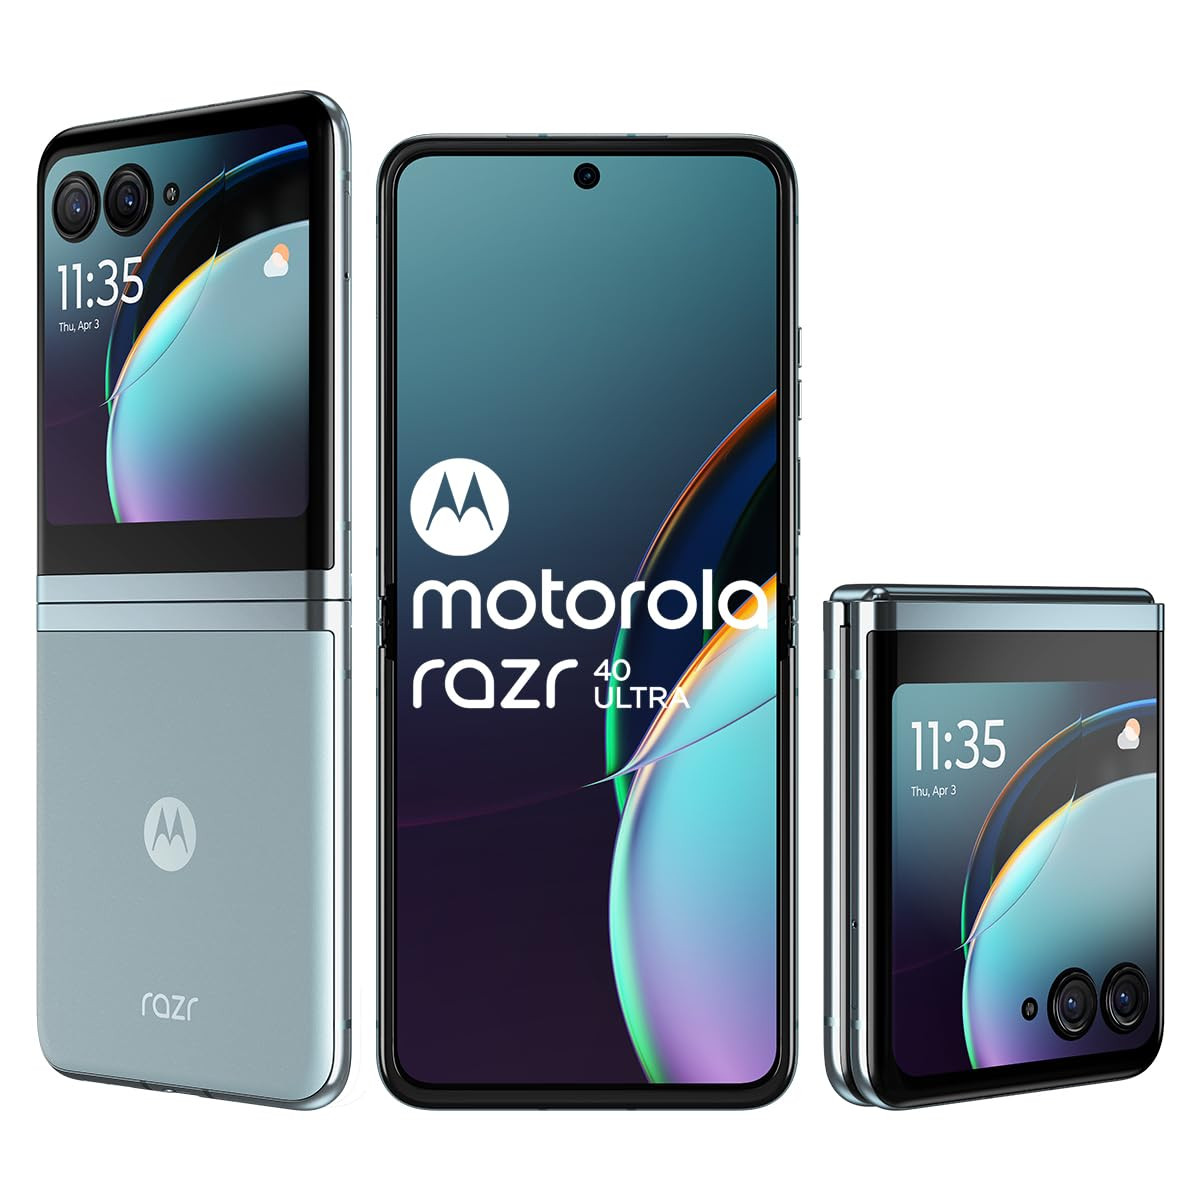 Motorola razr 40 Ultra (Glacier Blue, 8GB RAM, 256GB Storage) | 3.6